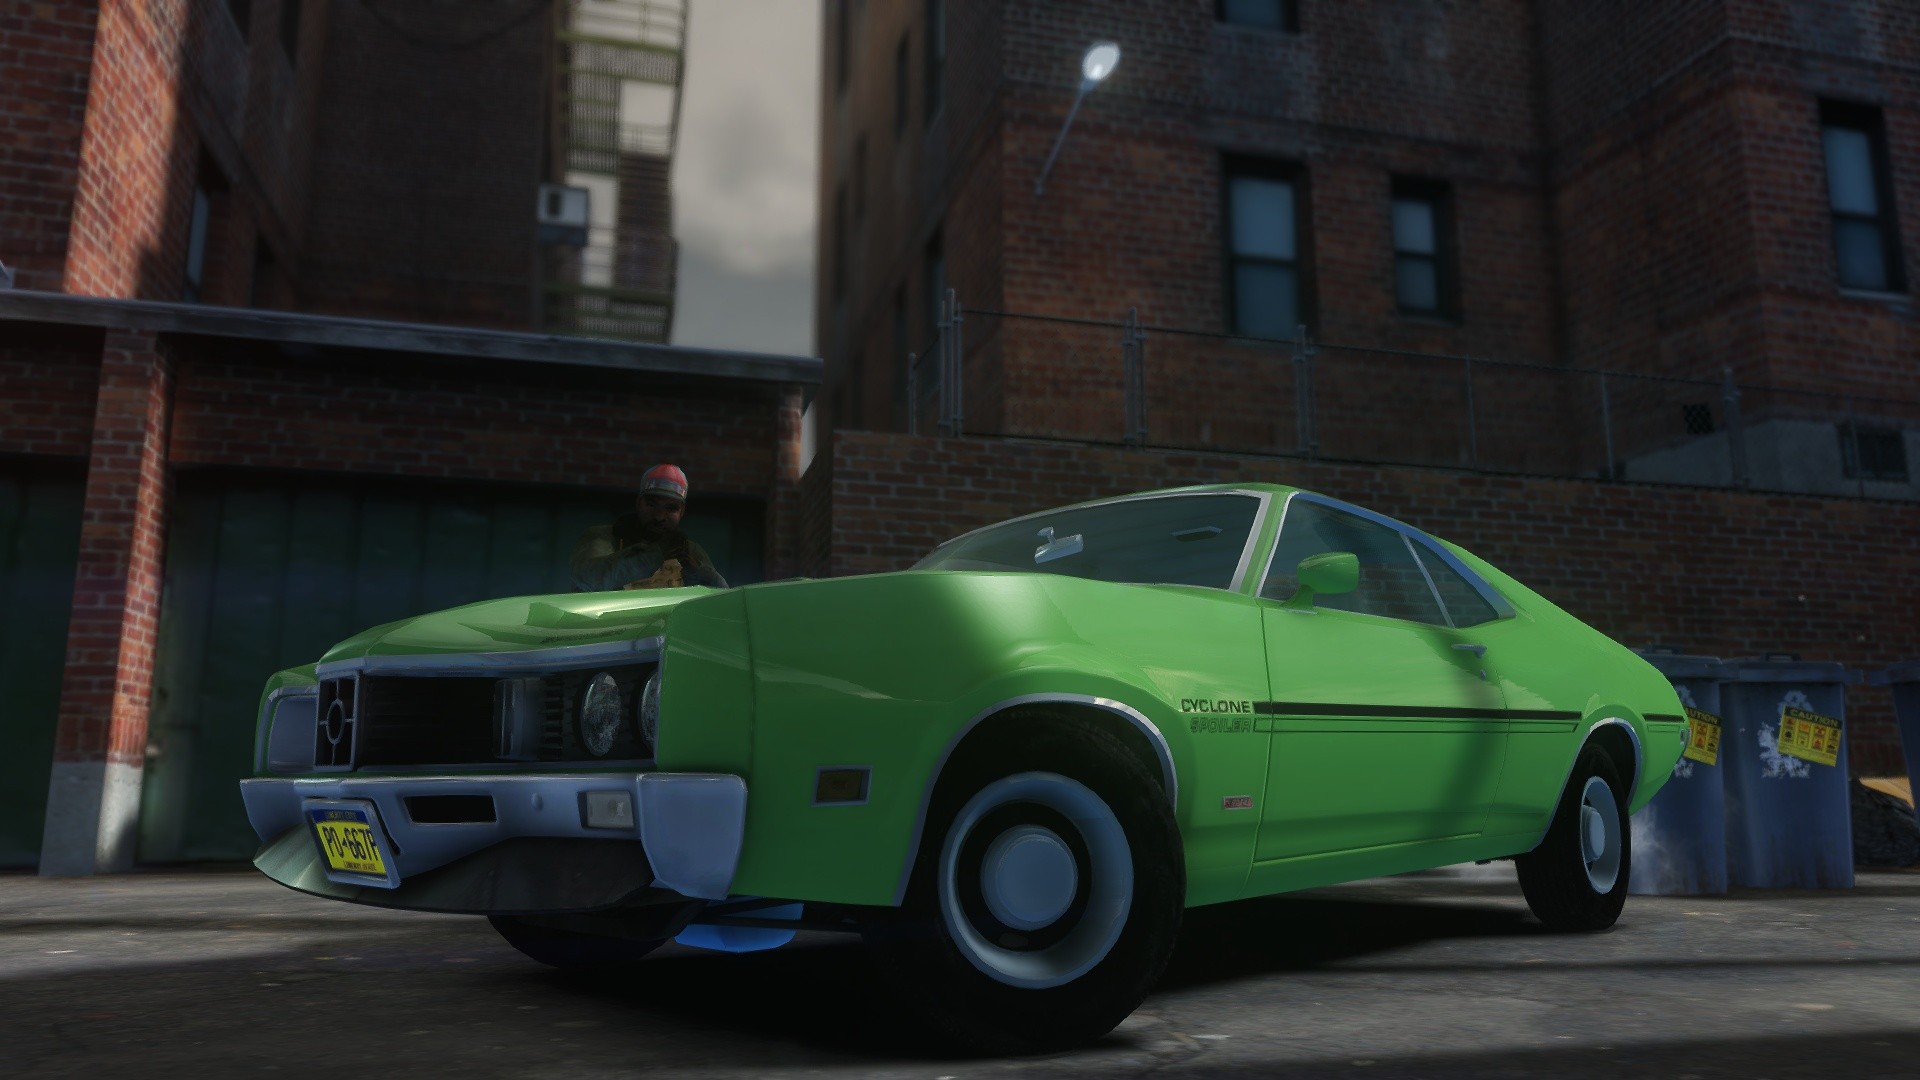 Grand Theft Auto Screenshots n Stuff! Enb20114